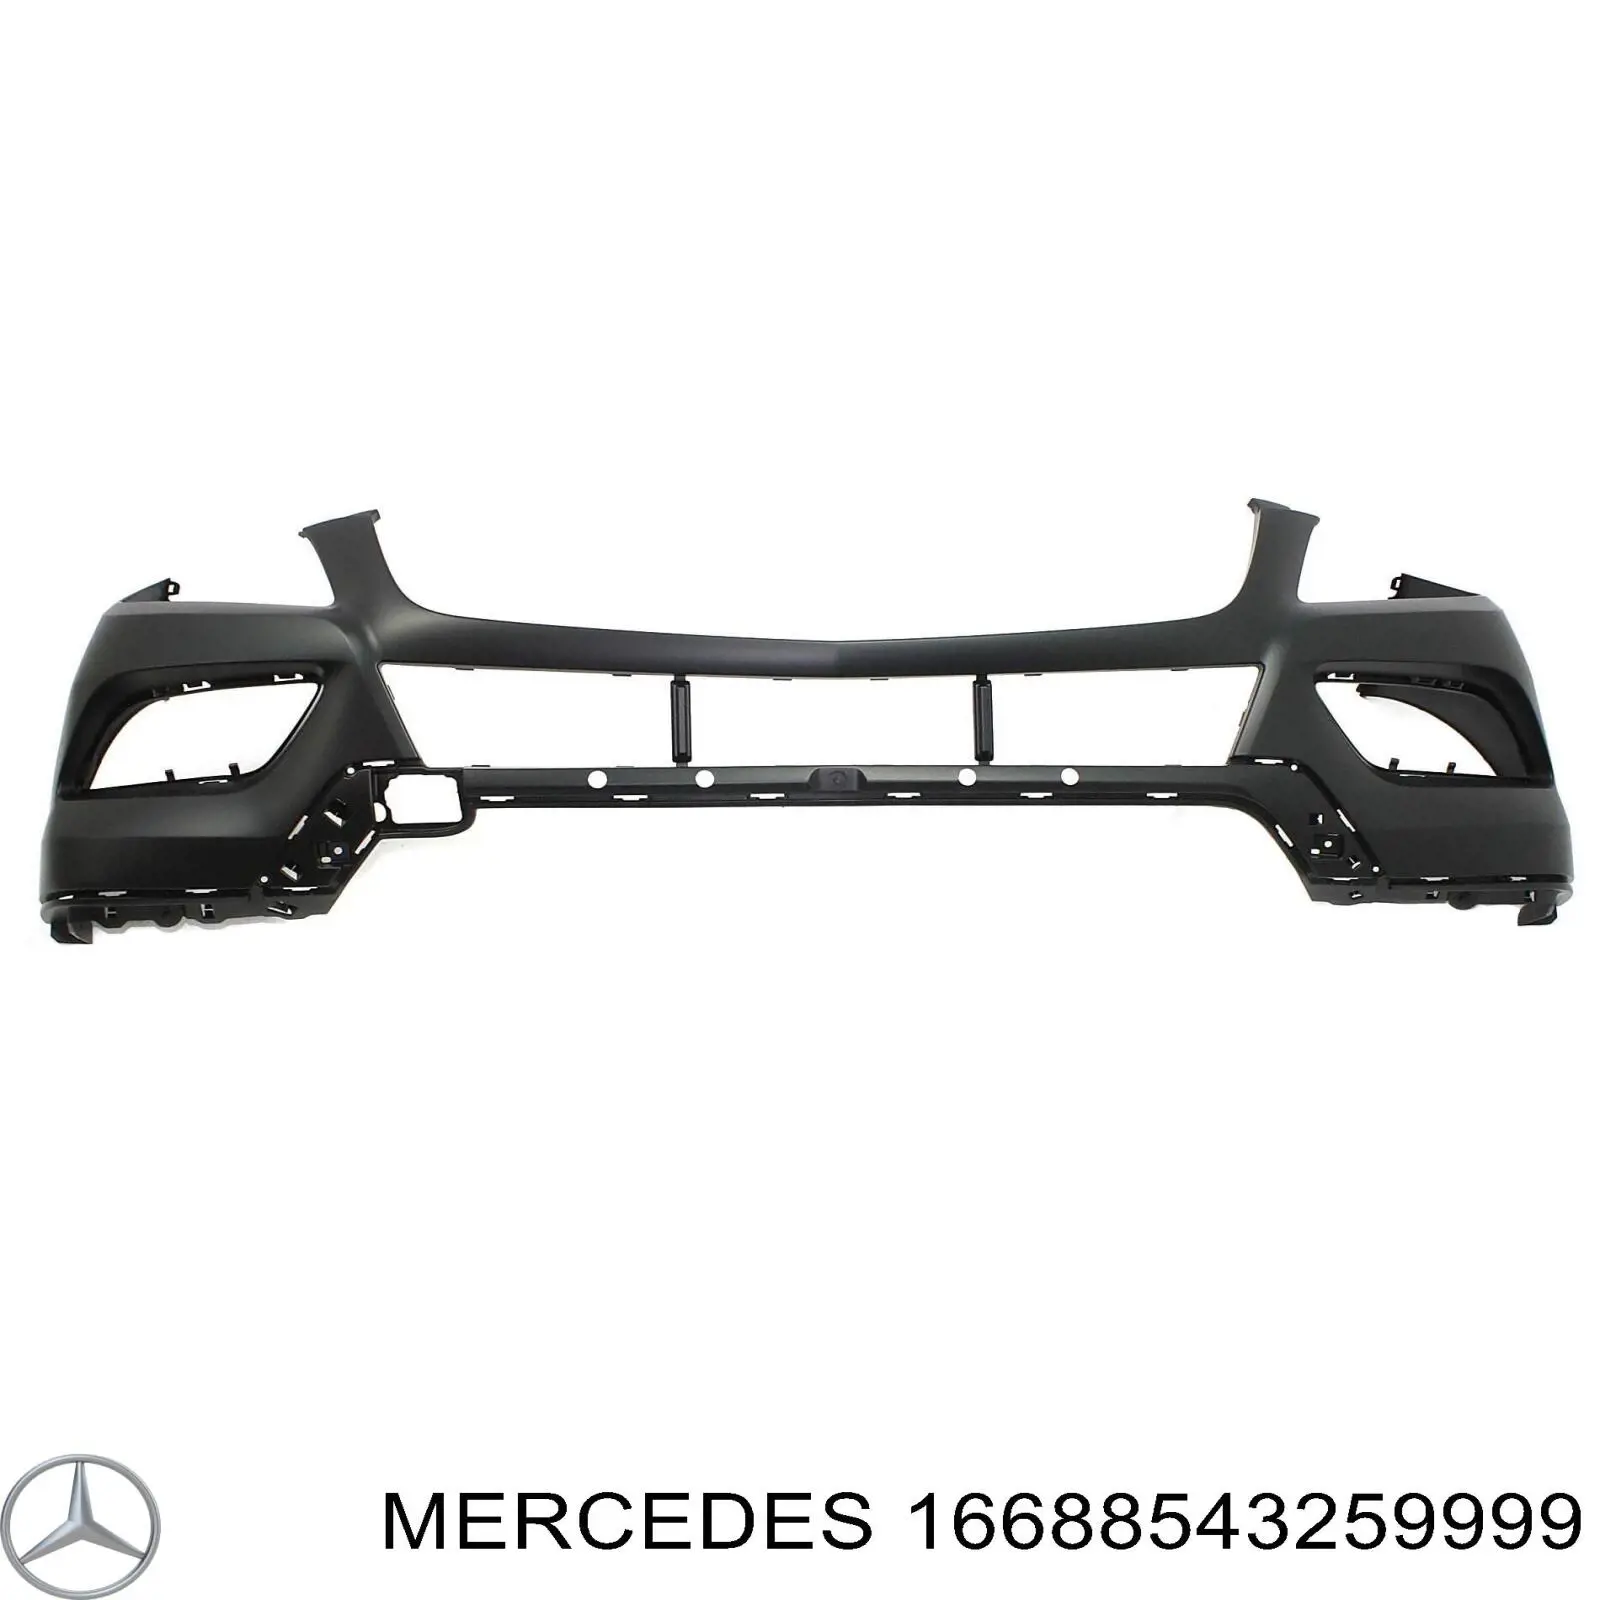 A16688543259999 Mercedes